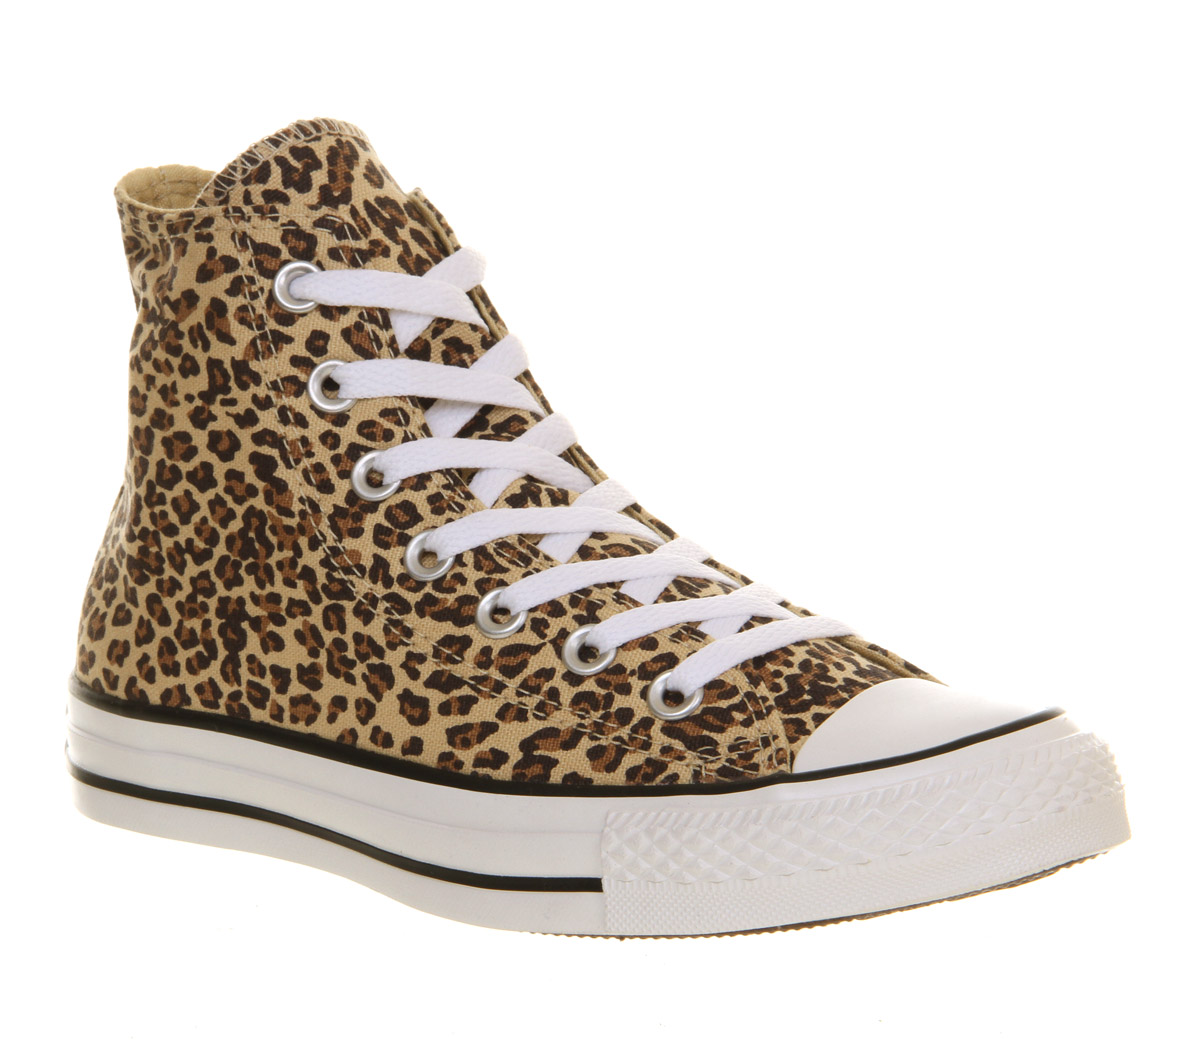 leopard print converse size 8